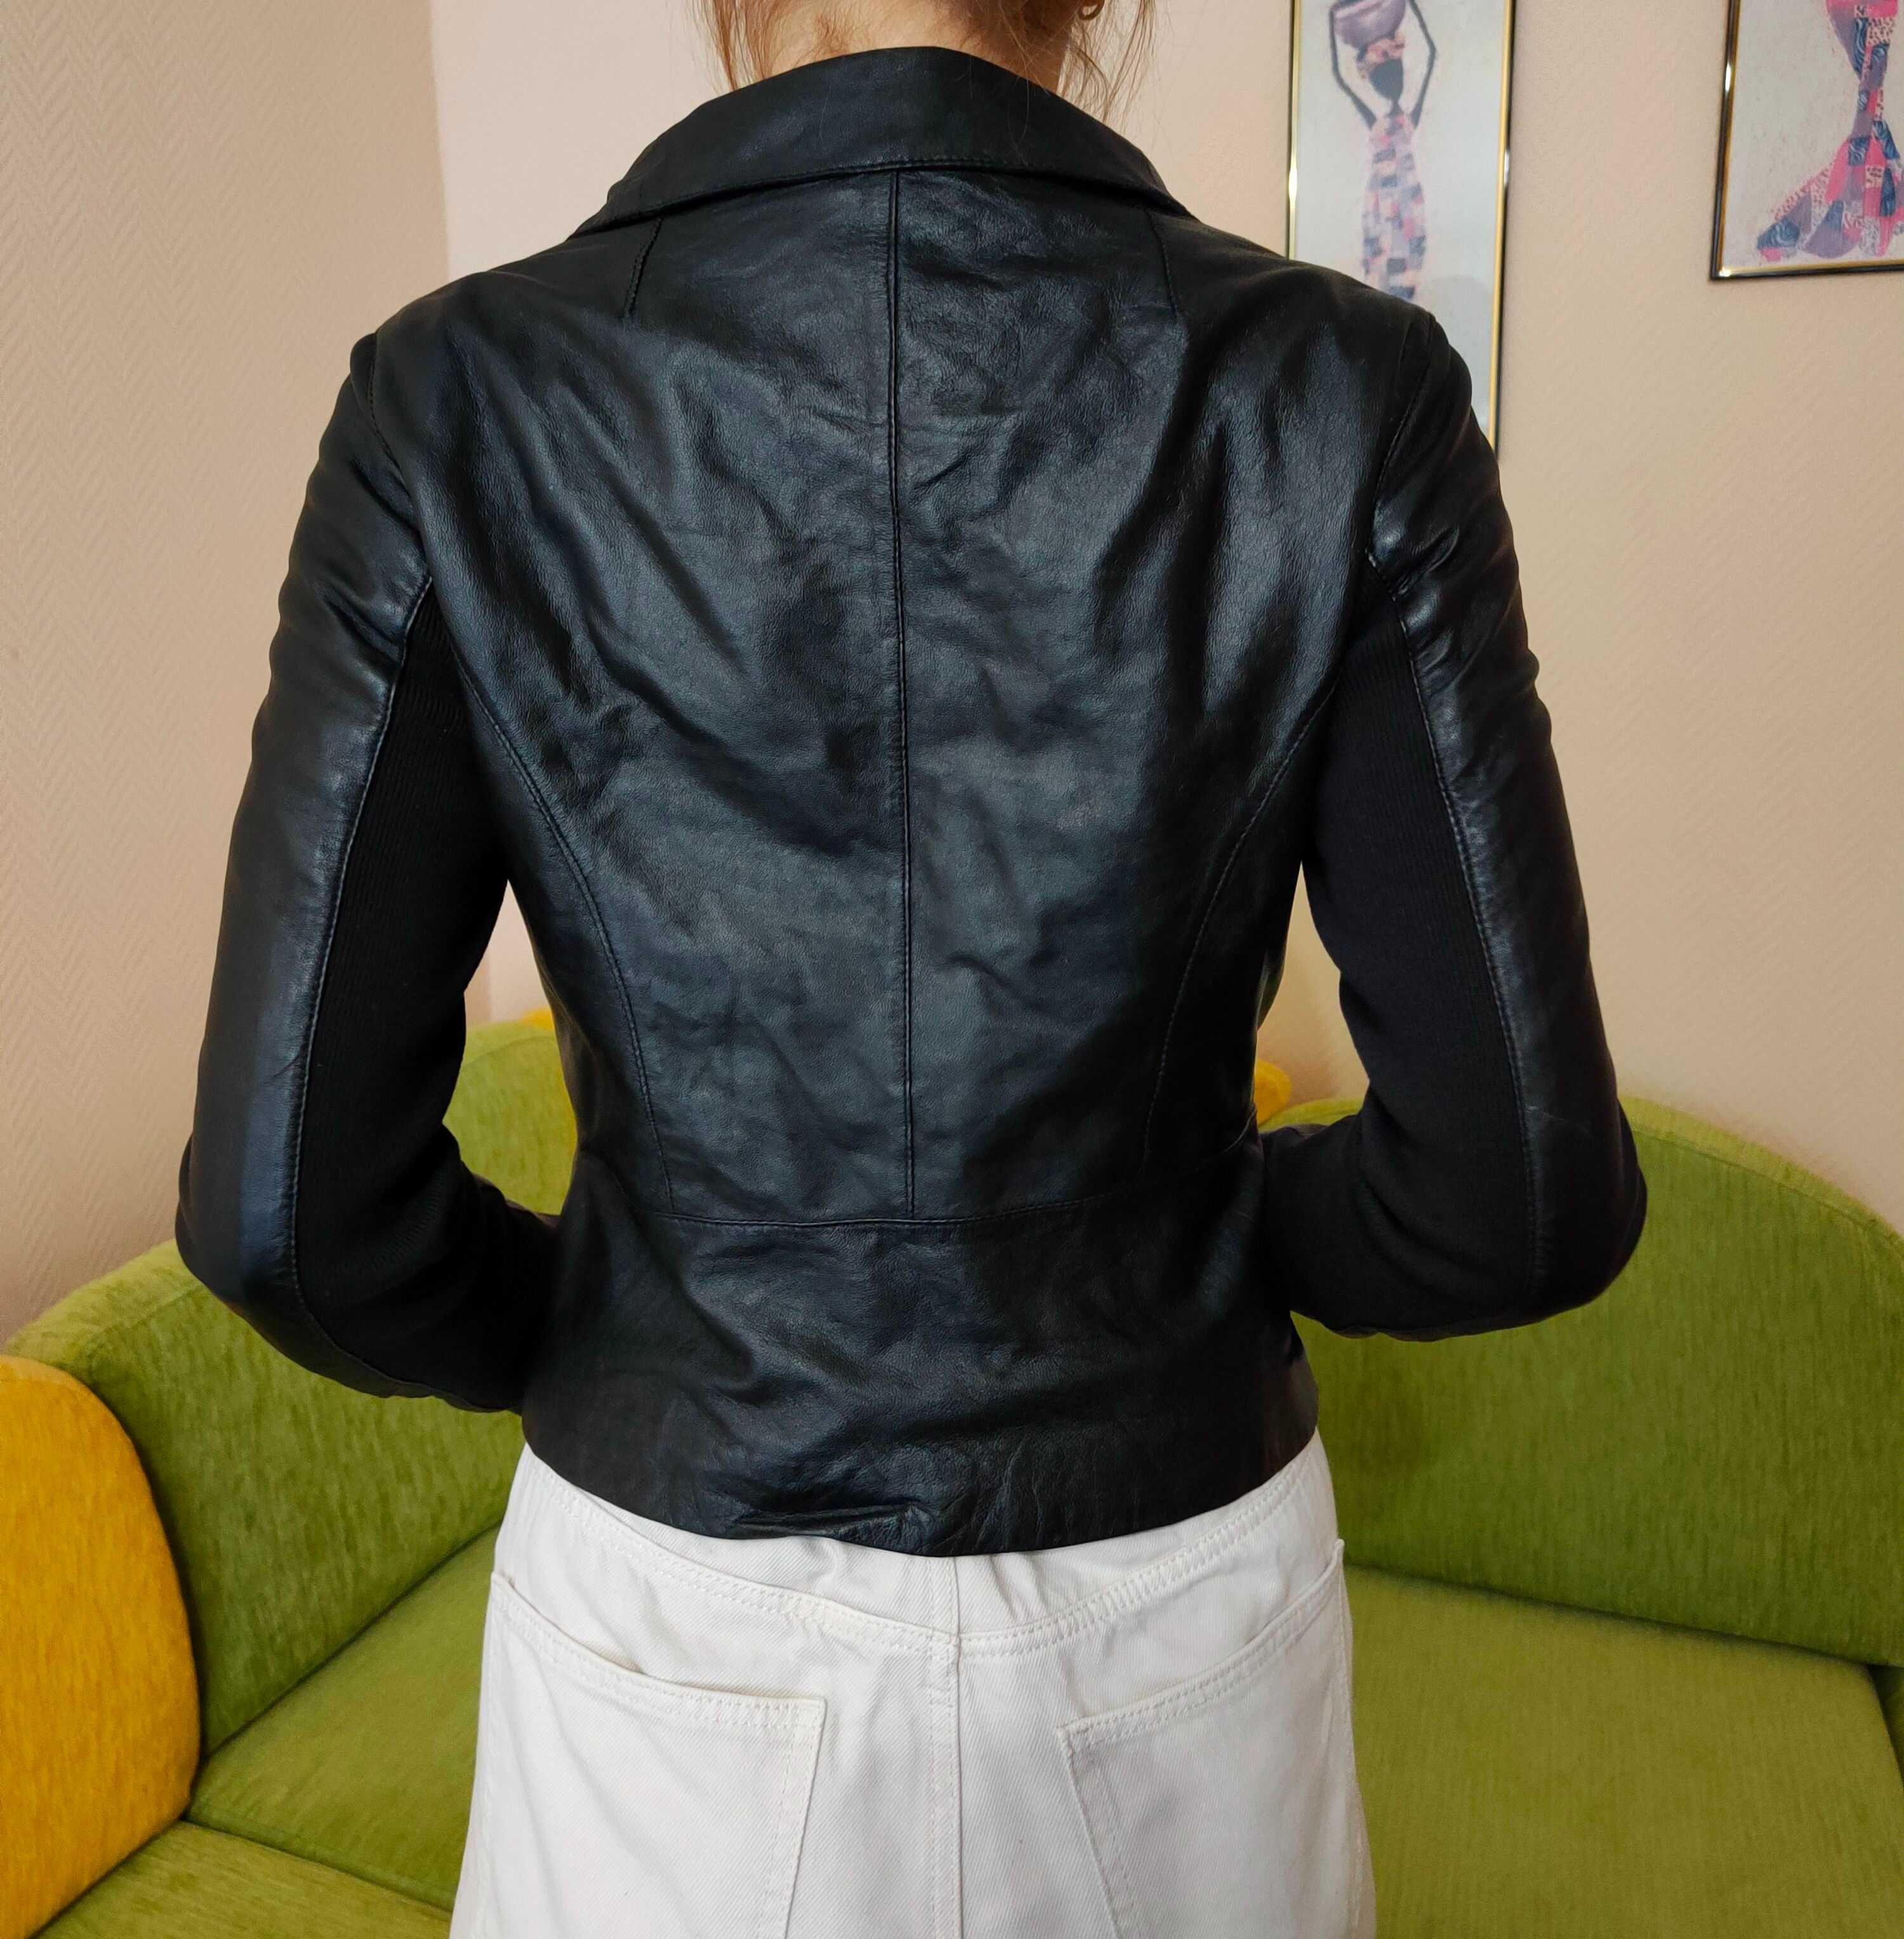 Натуральна шкіряна жіноча куртка косуха Oasis